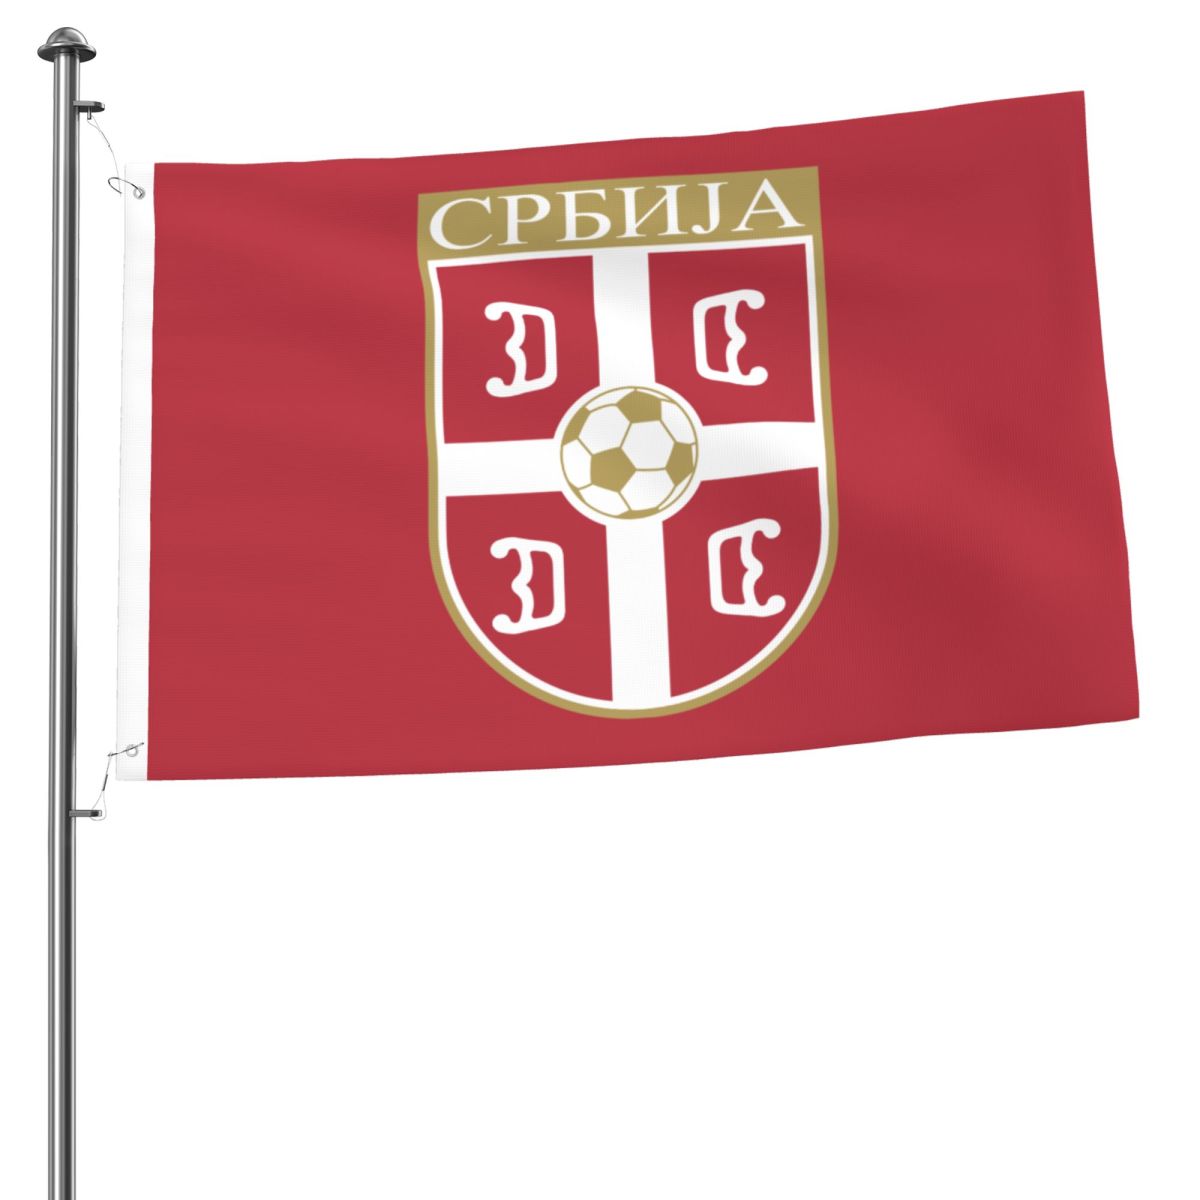 Serbia National Football Team 2x3 FT UV Resistant Flag